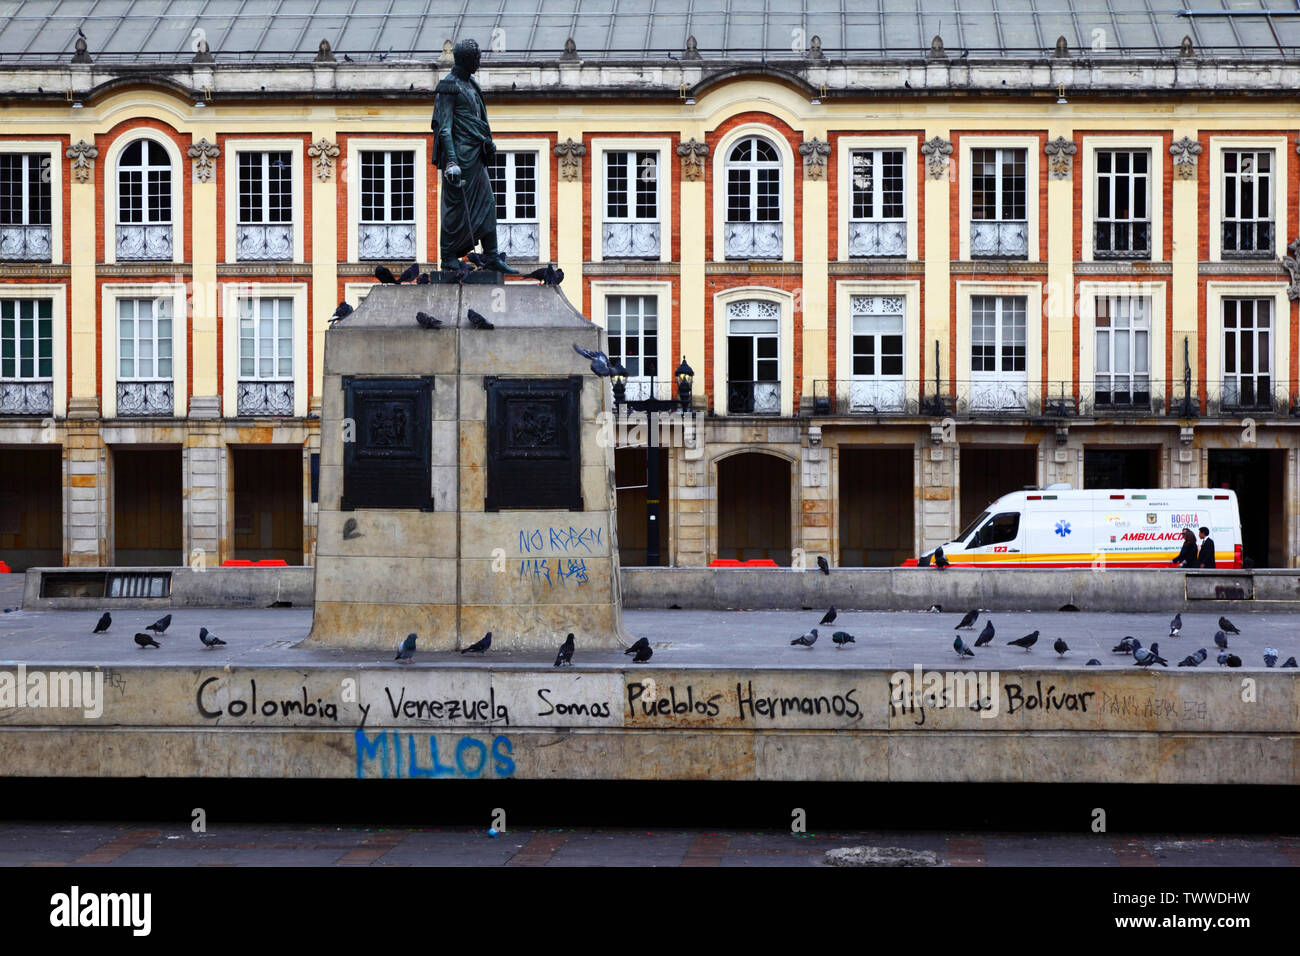 "Kolumbien und Venezuela sind wir Brüder, Söhne von Bolivar' Graffiti, Statue von Simón Bolívar und Lievano Palast, dem Plaza Bolívar, Bogotá, Kolumbien Stockfoto